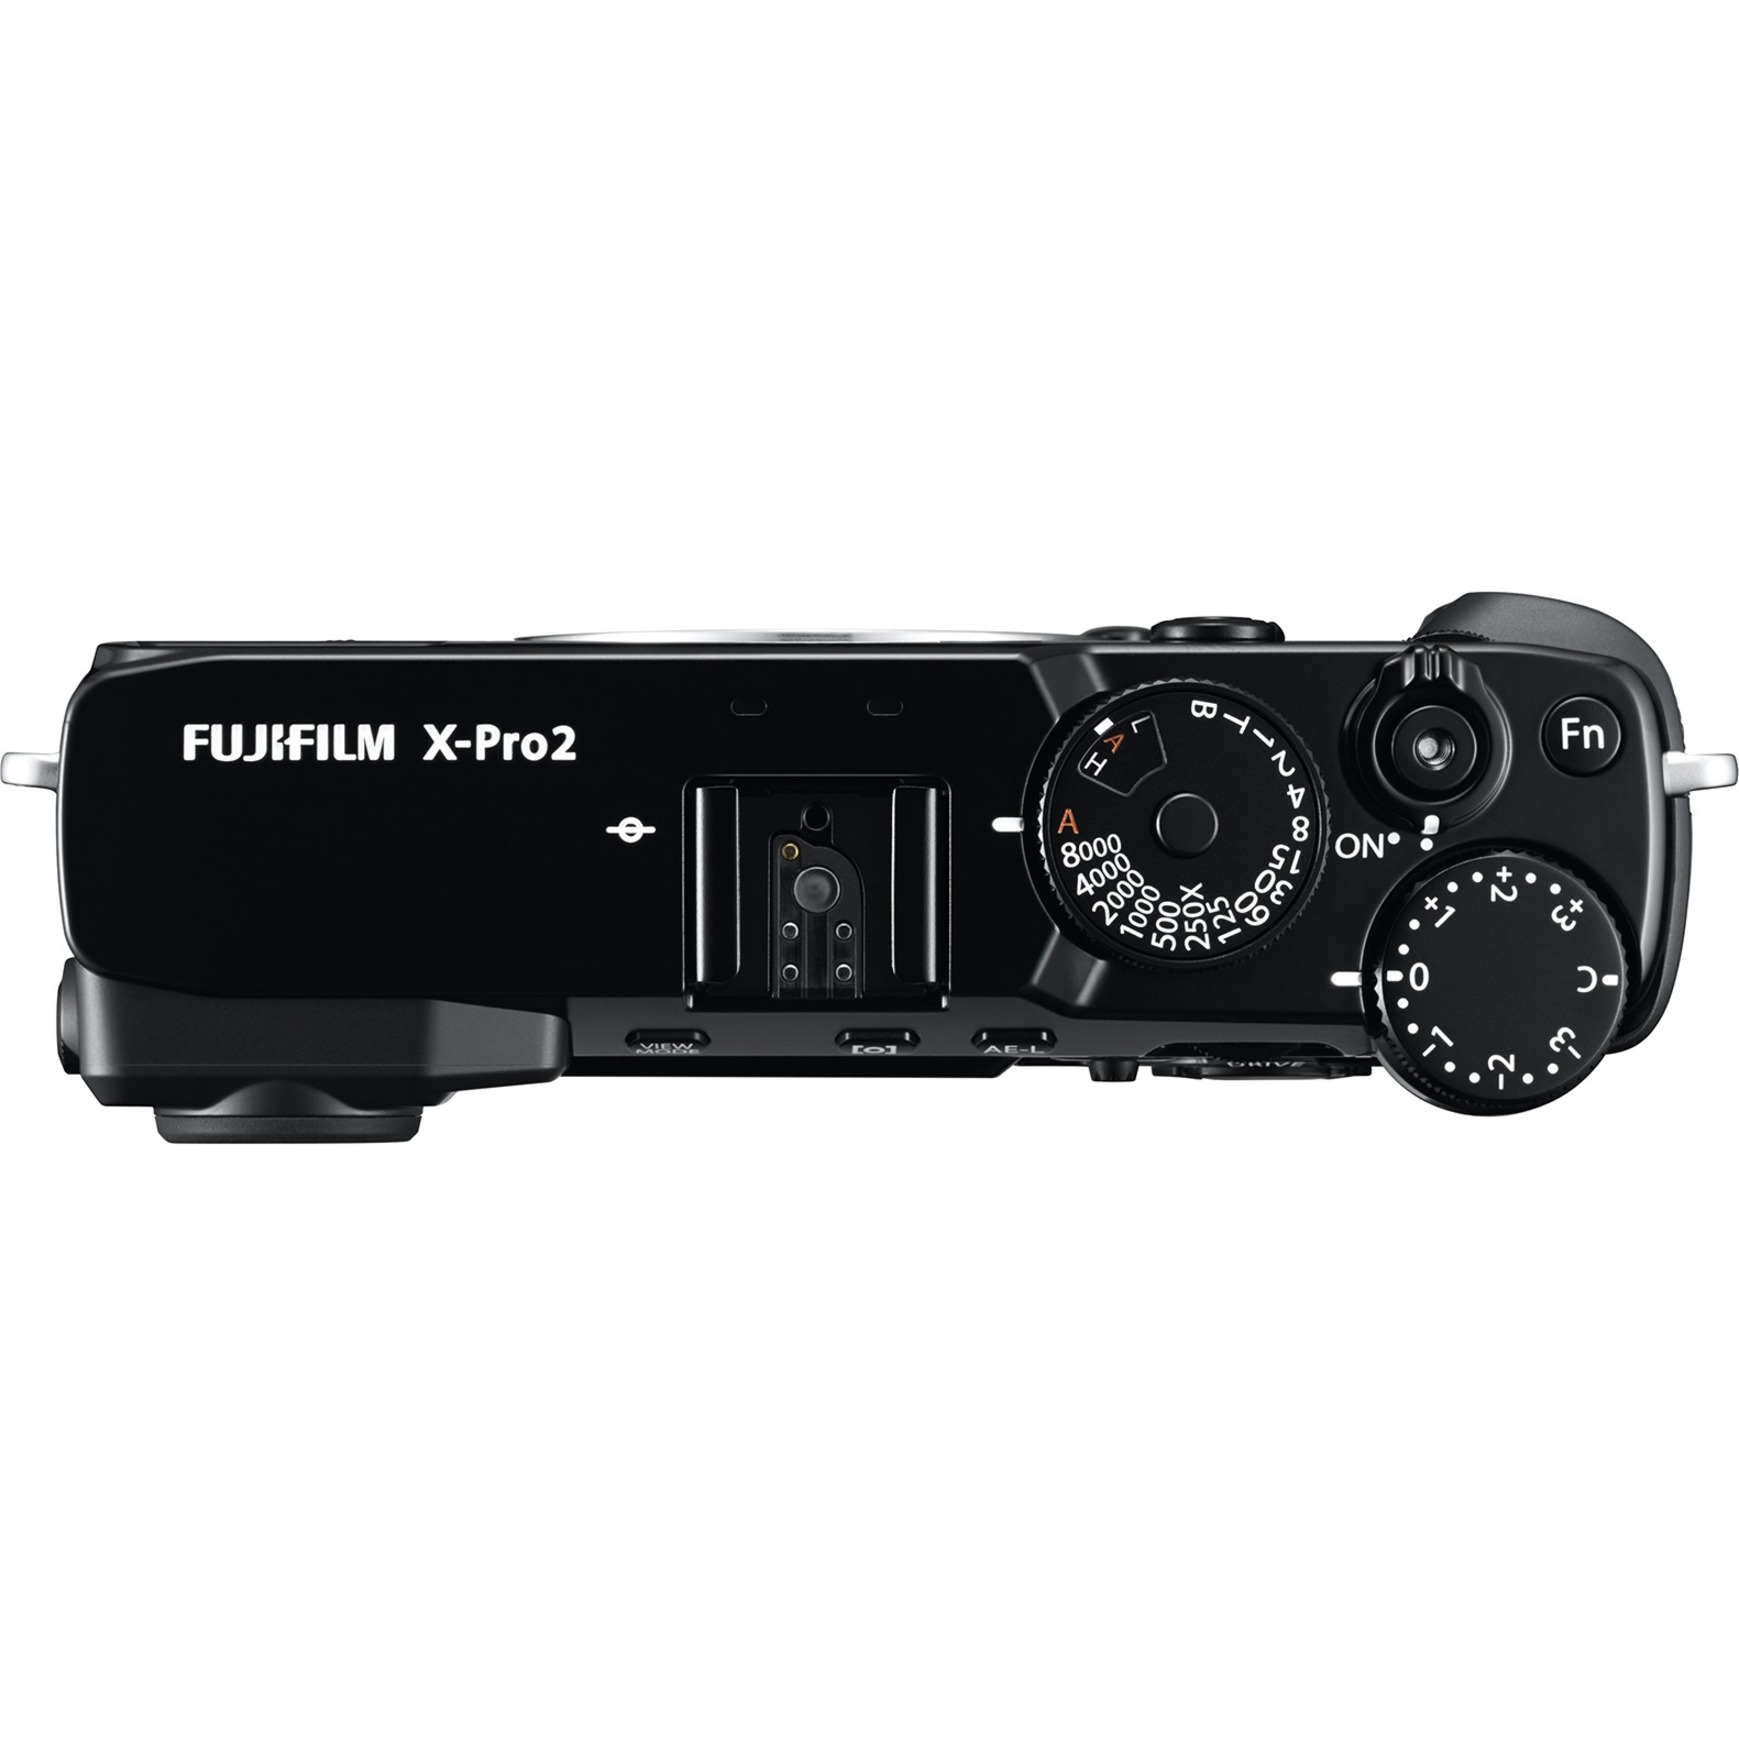 Fujifilm X-Pro2 24.3 Megapixel Mirrorless Camera Body Only, Black - image 5 of 5